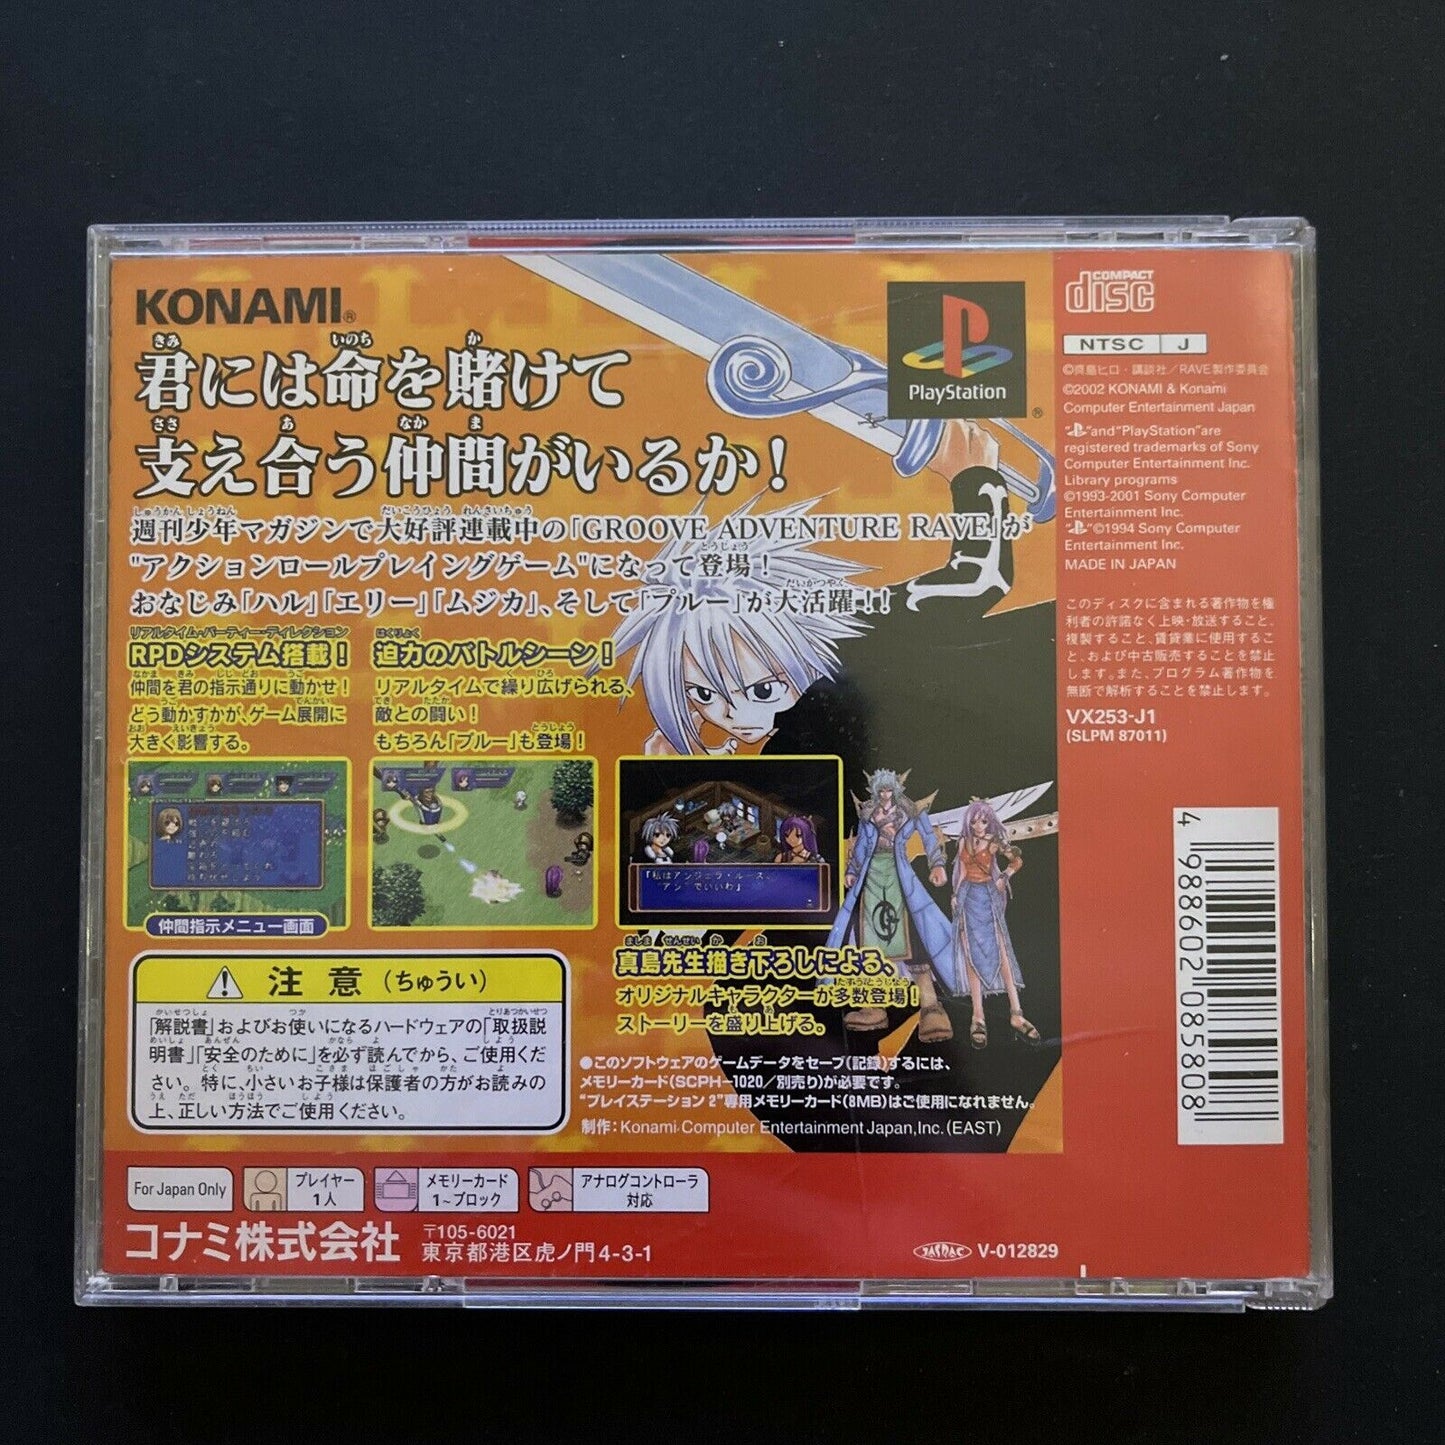 Rave Groove Adventure - PS1 Playstation NTSC-J Konami Game Complete